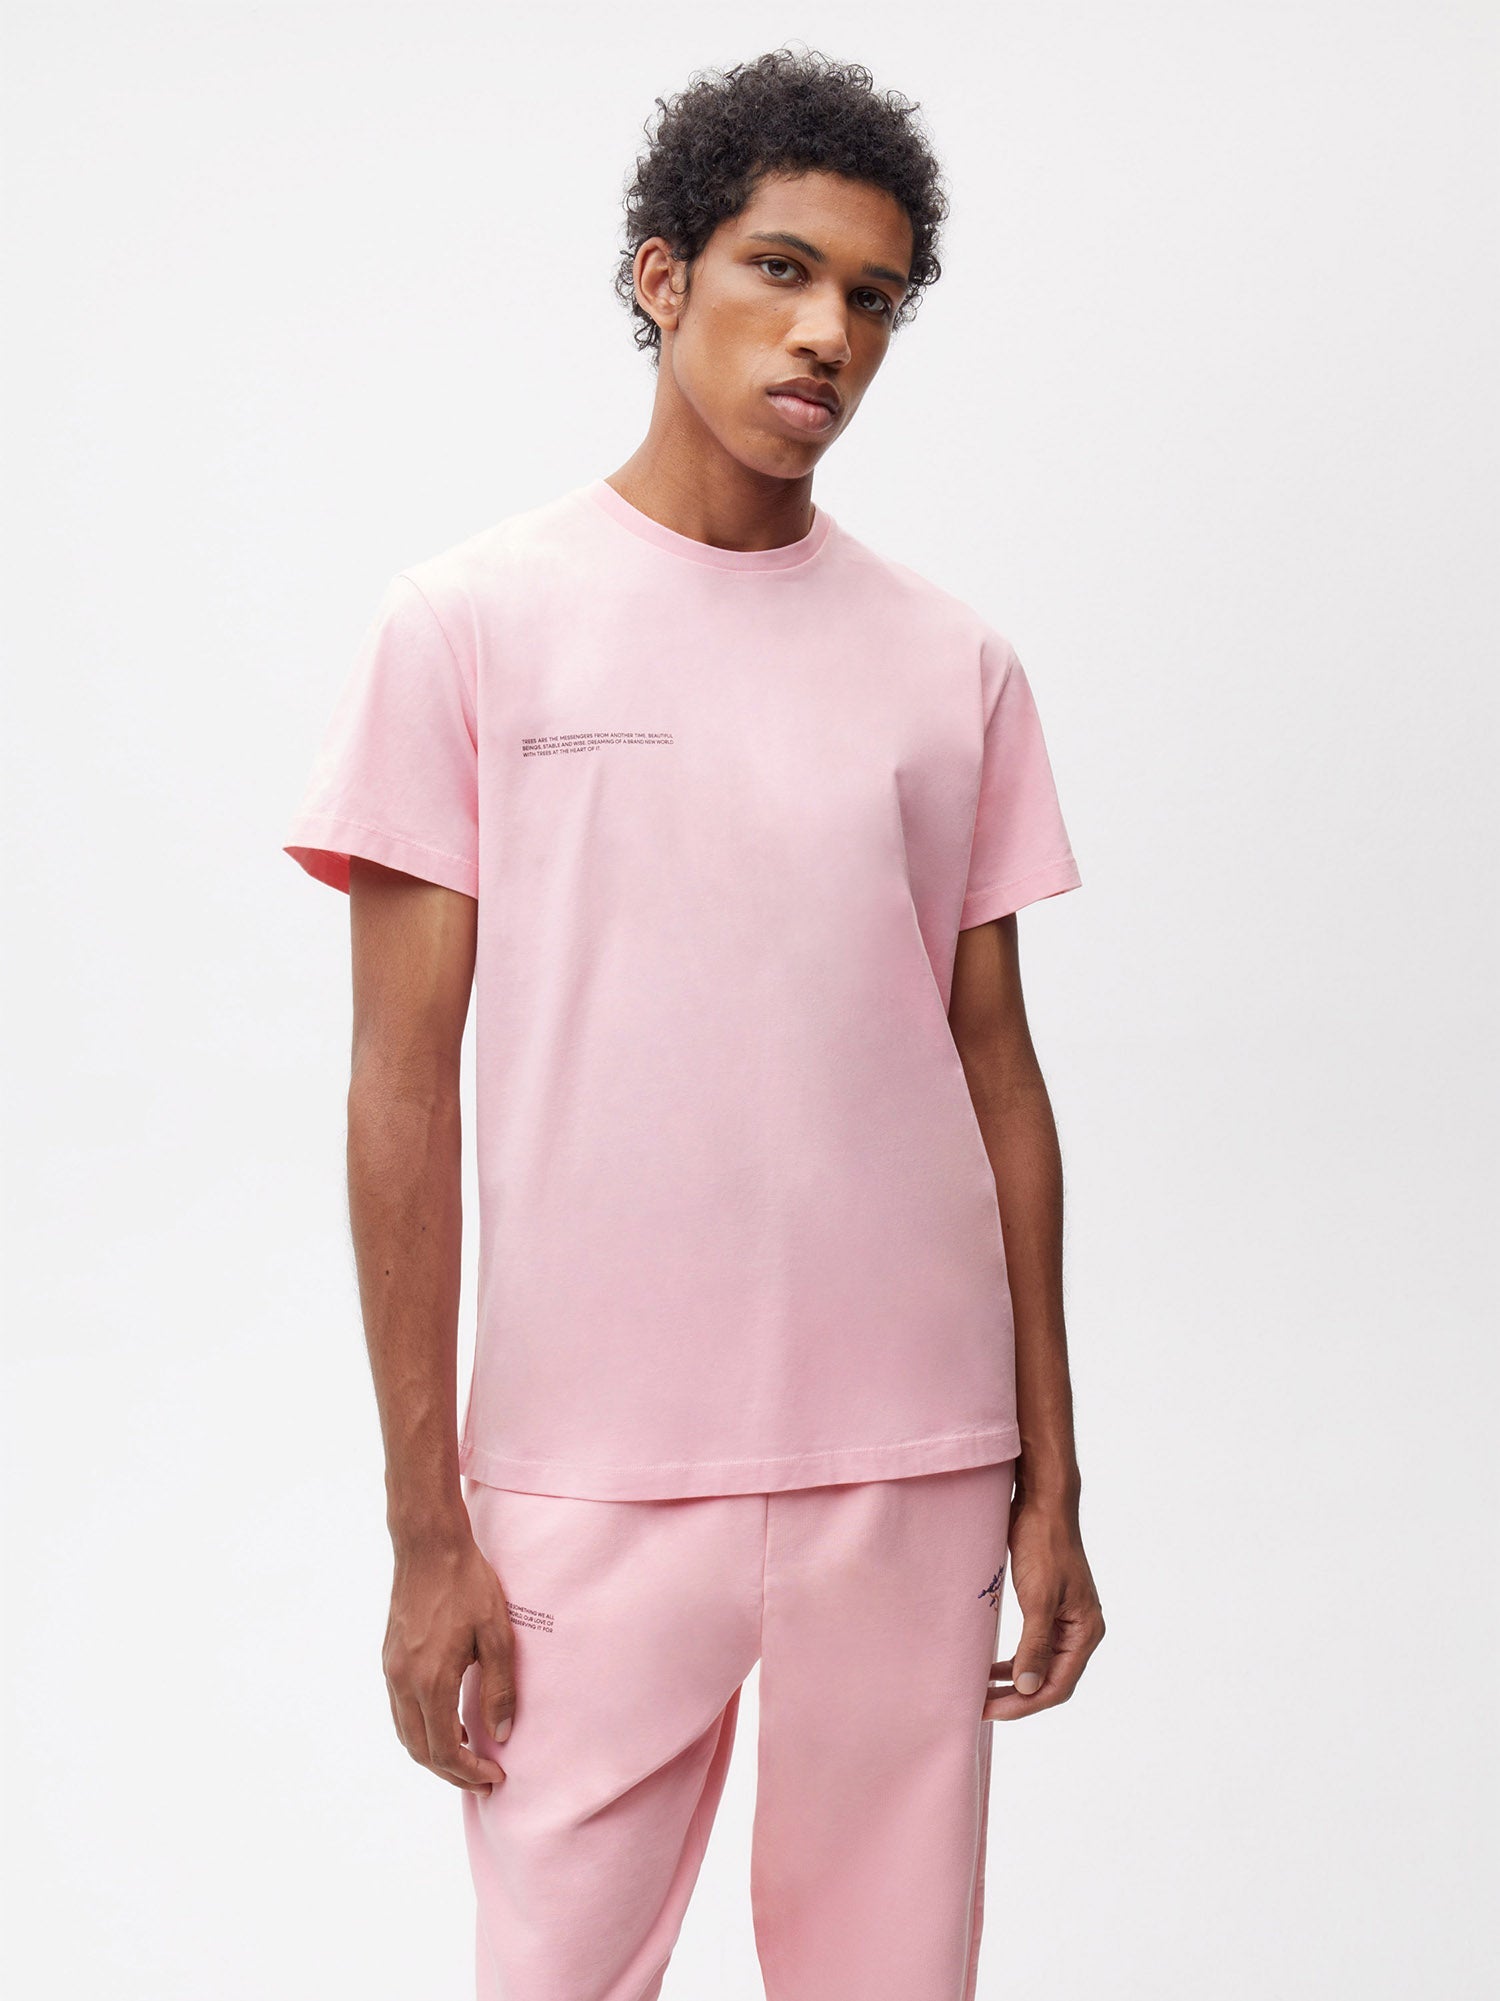 Pangaia-Kenny-Scharf-Organic-Cotton-T-Shirt-Swamp-Style-Sakura-Pink-Male-1